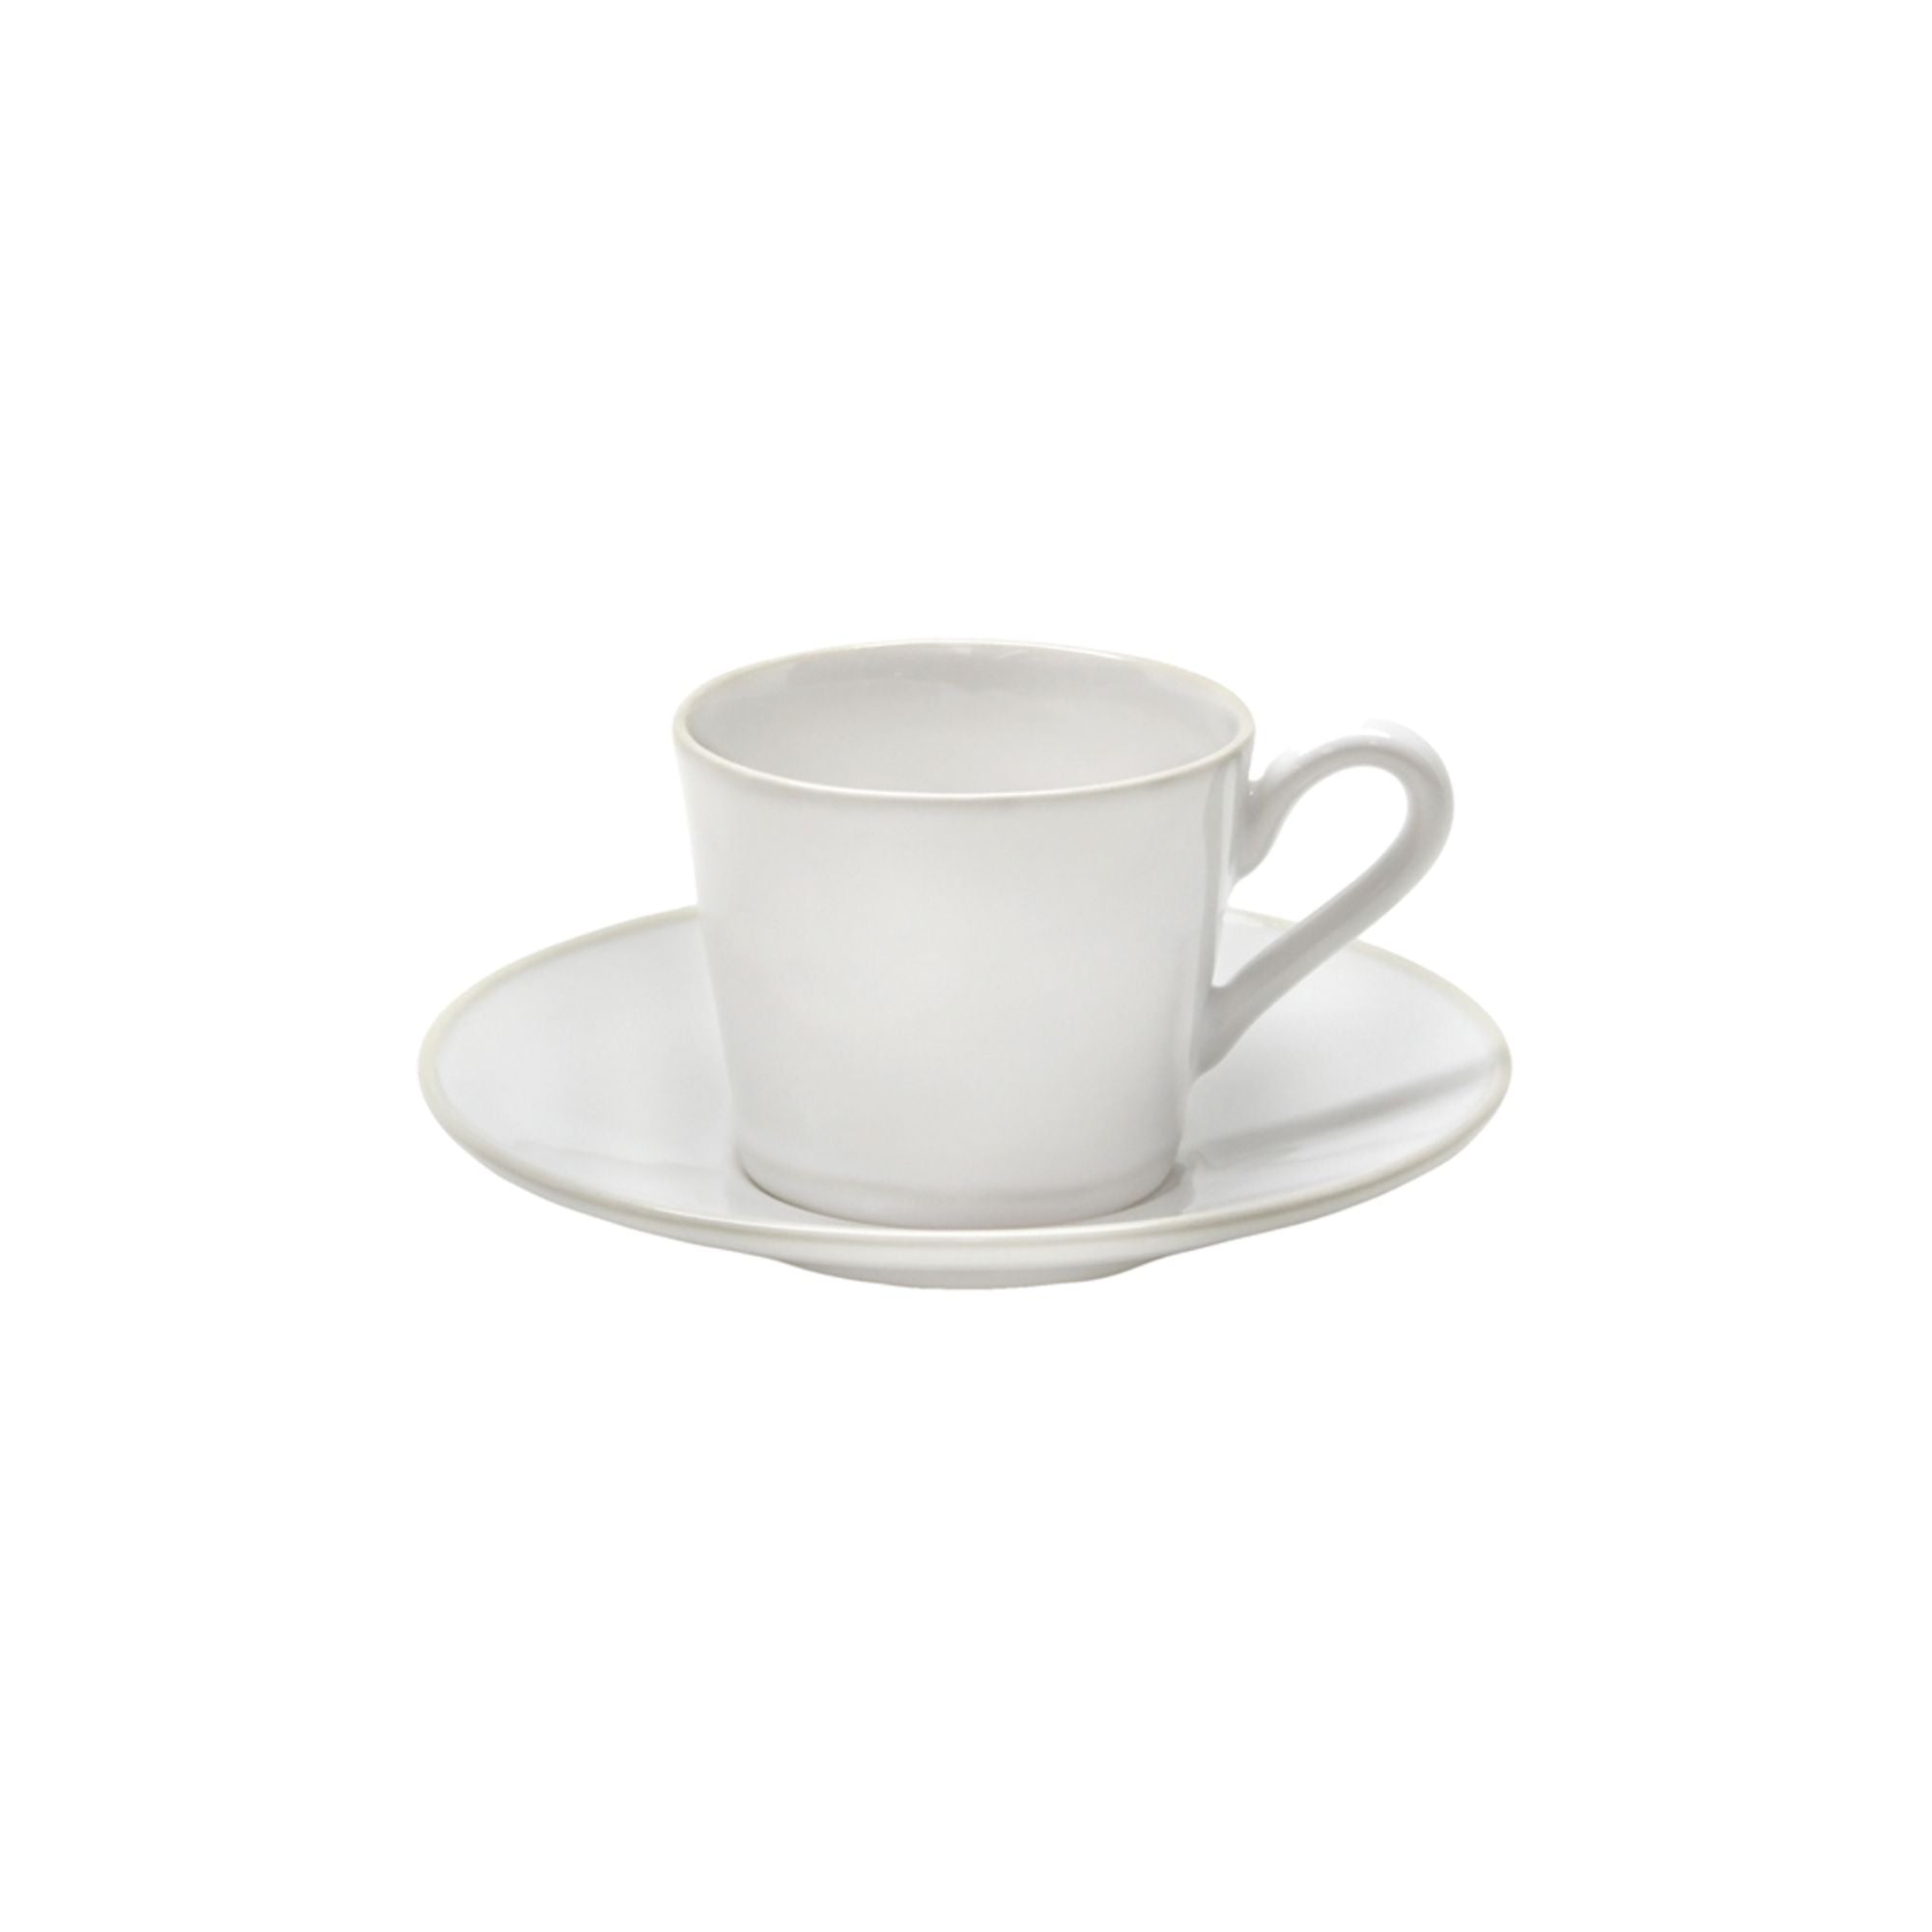 Beja Tea Cup and Saucer 6 oz. White-Cream